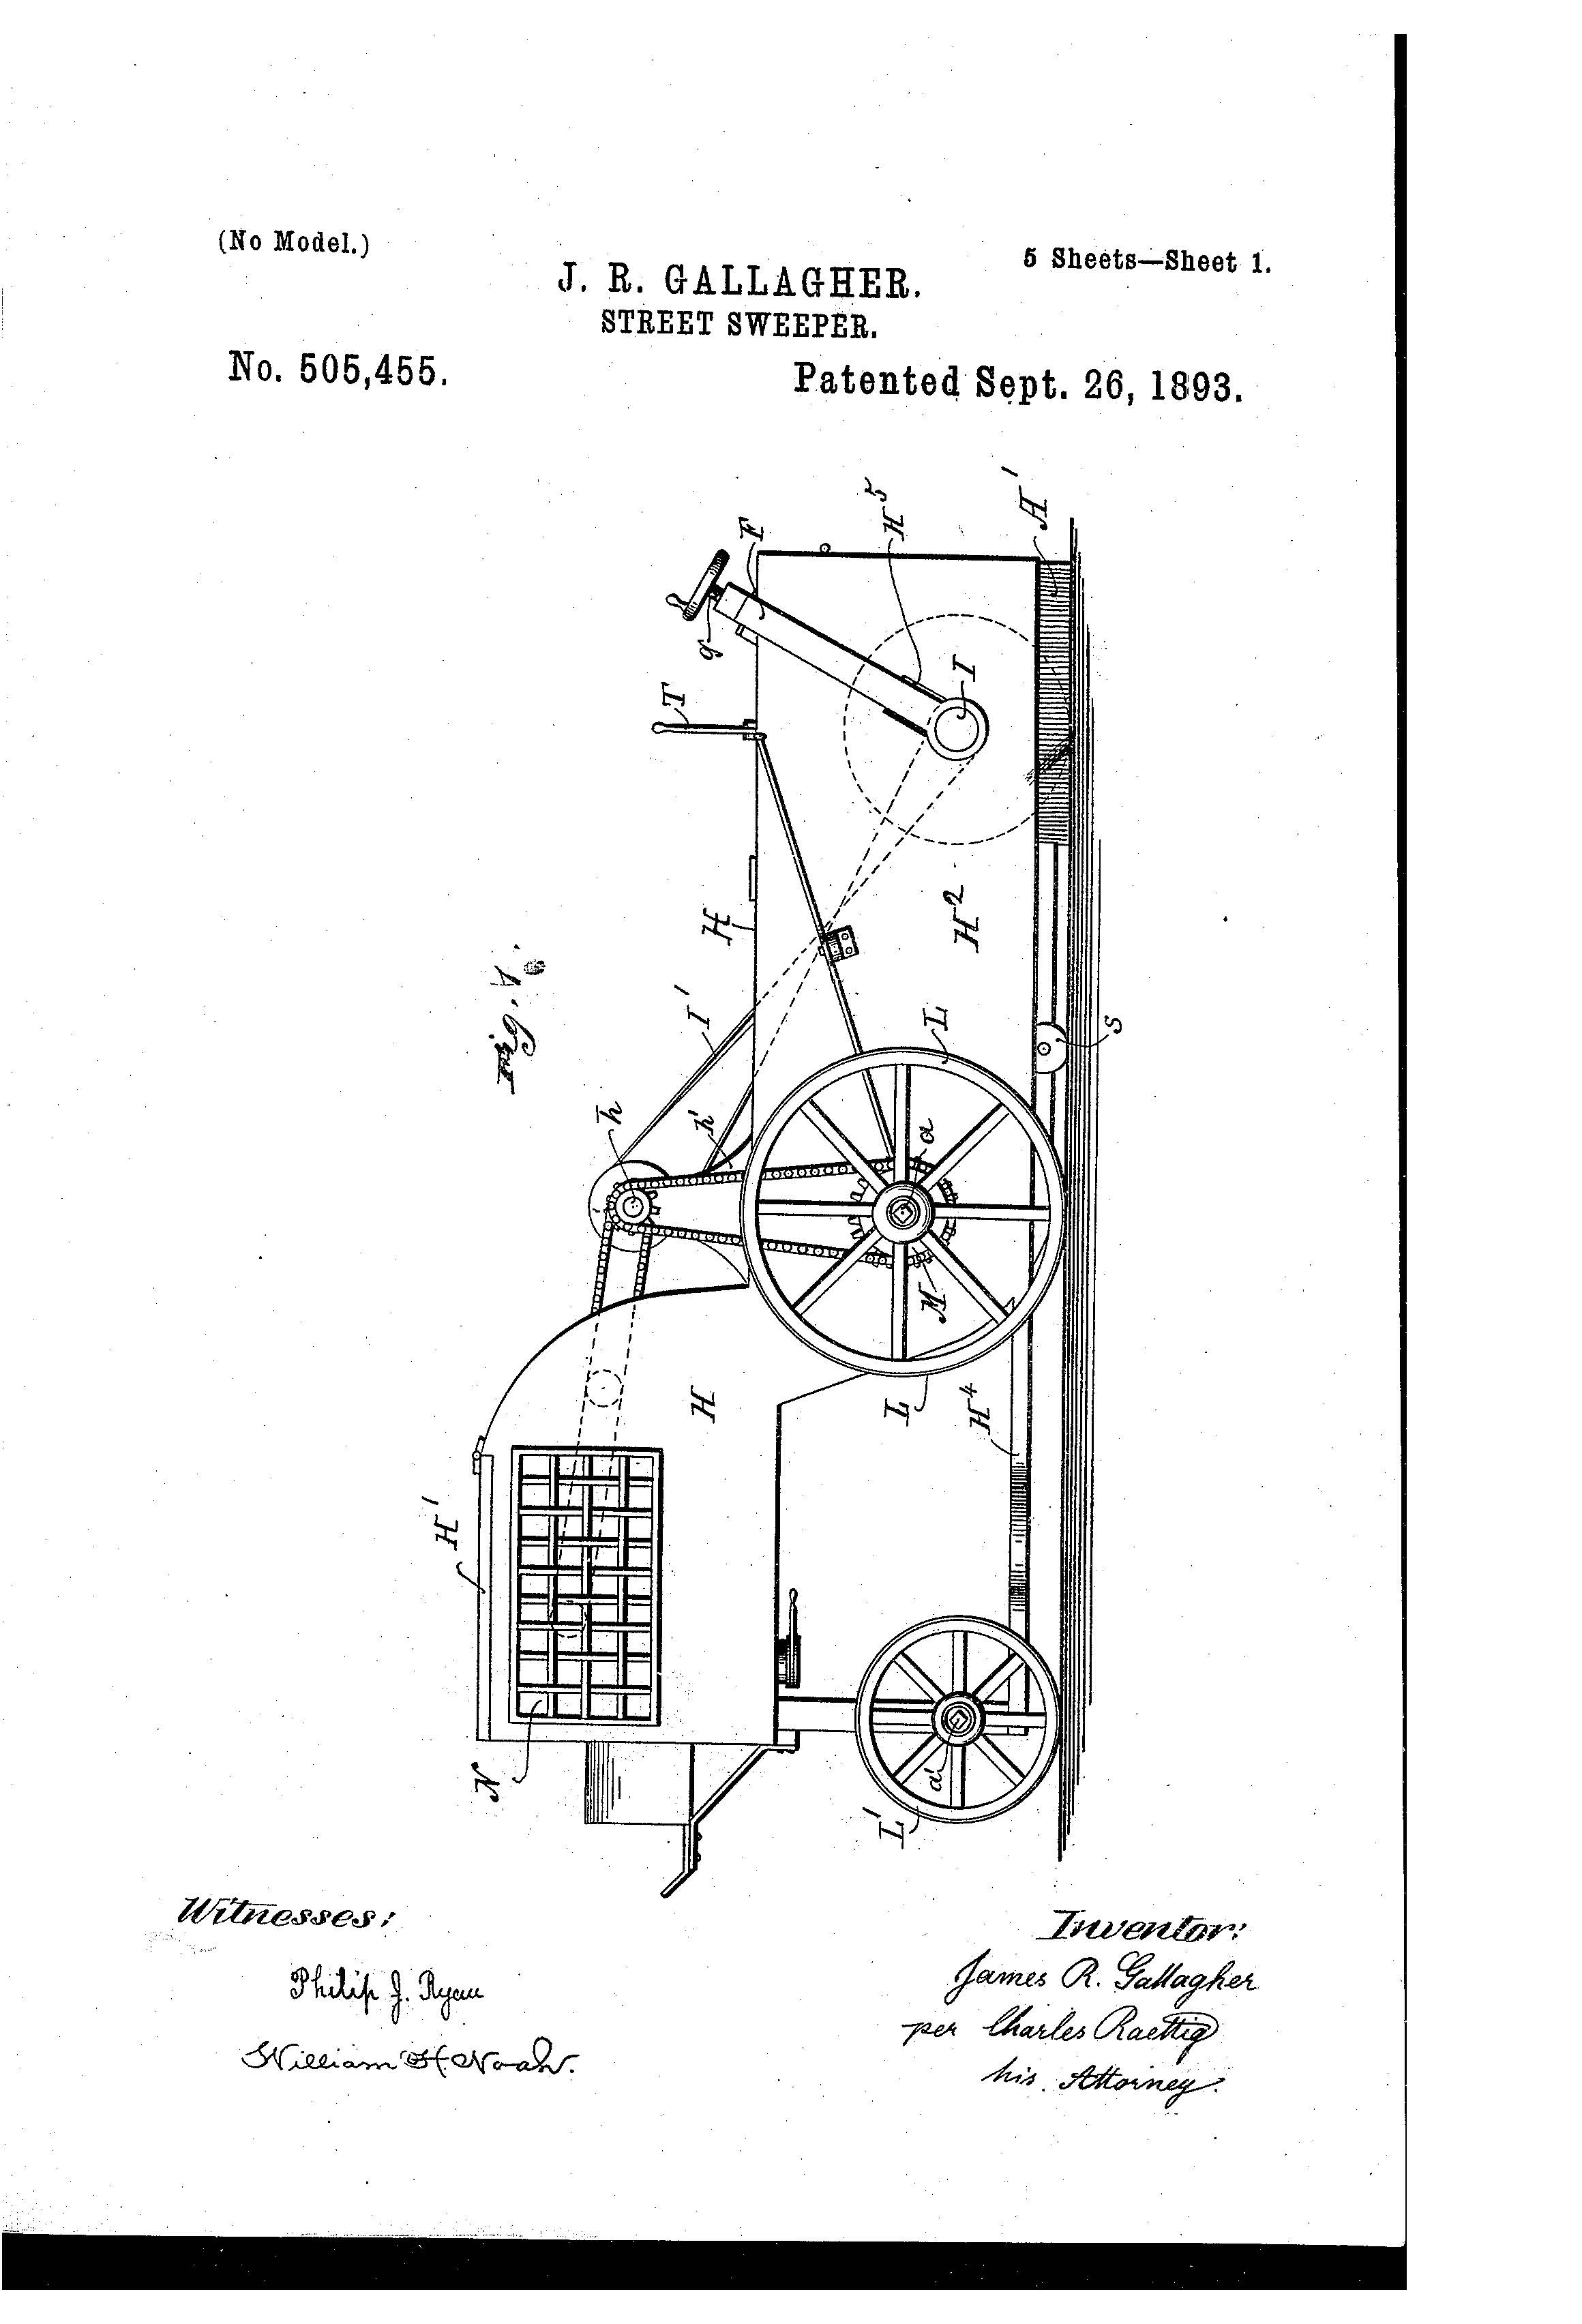 Street Sweeper Patent